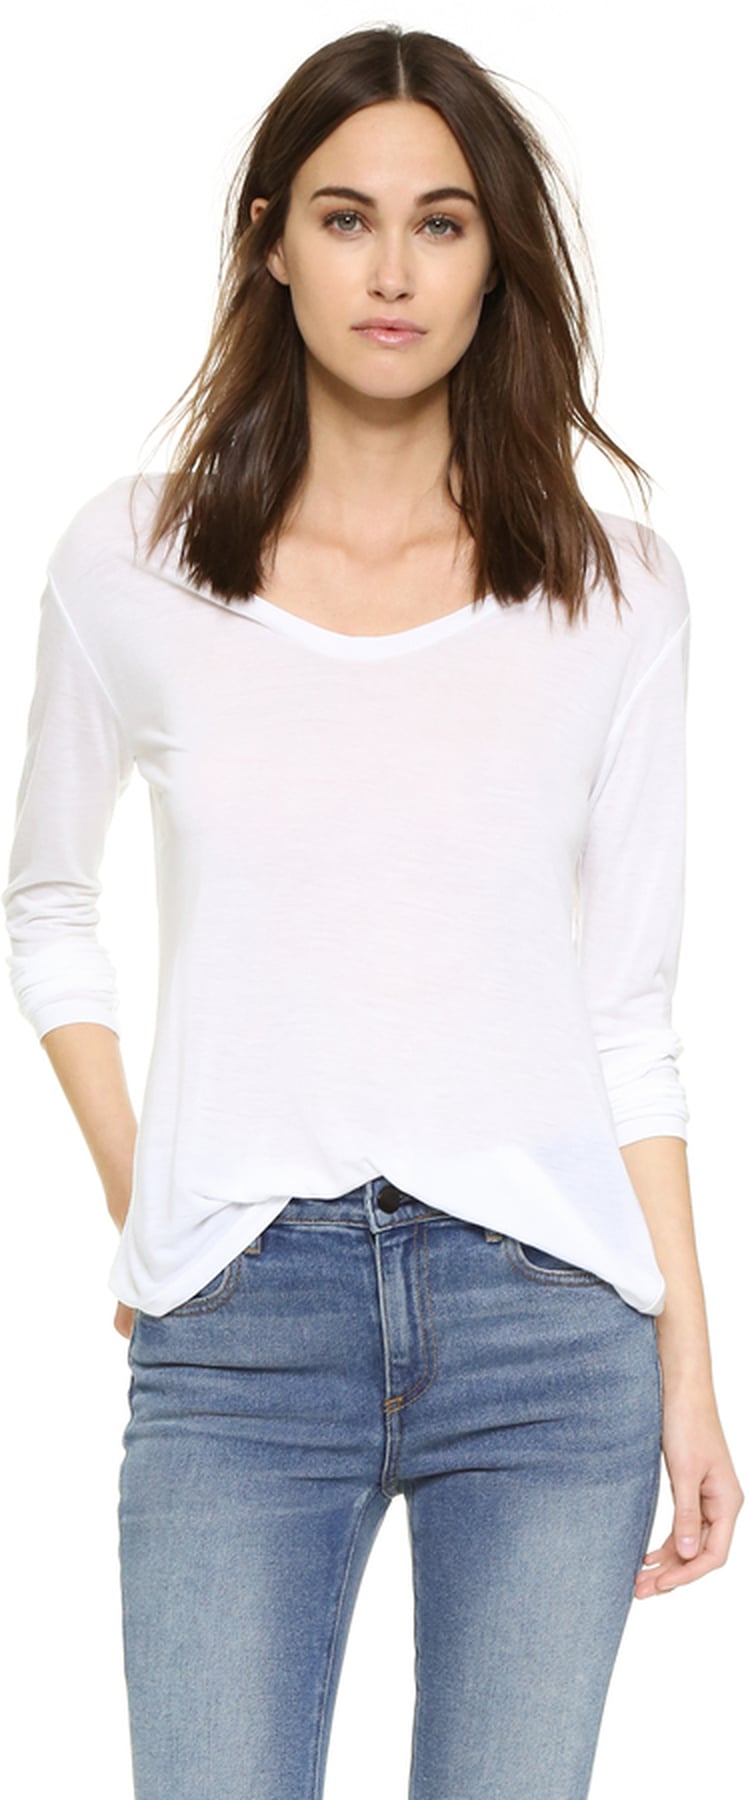 Long-Sleeved T-Shirt Shopping | POPSUGAR Fashion